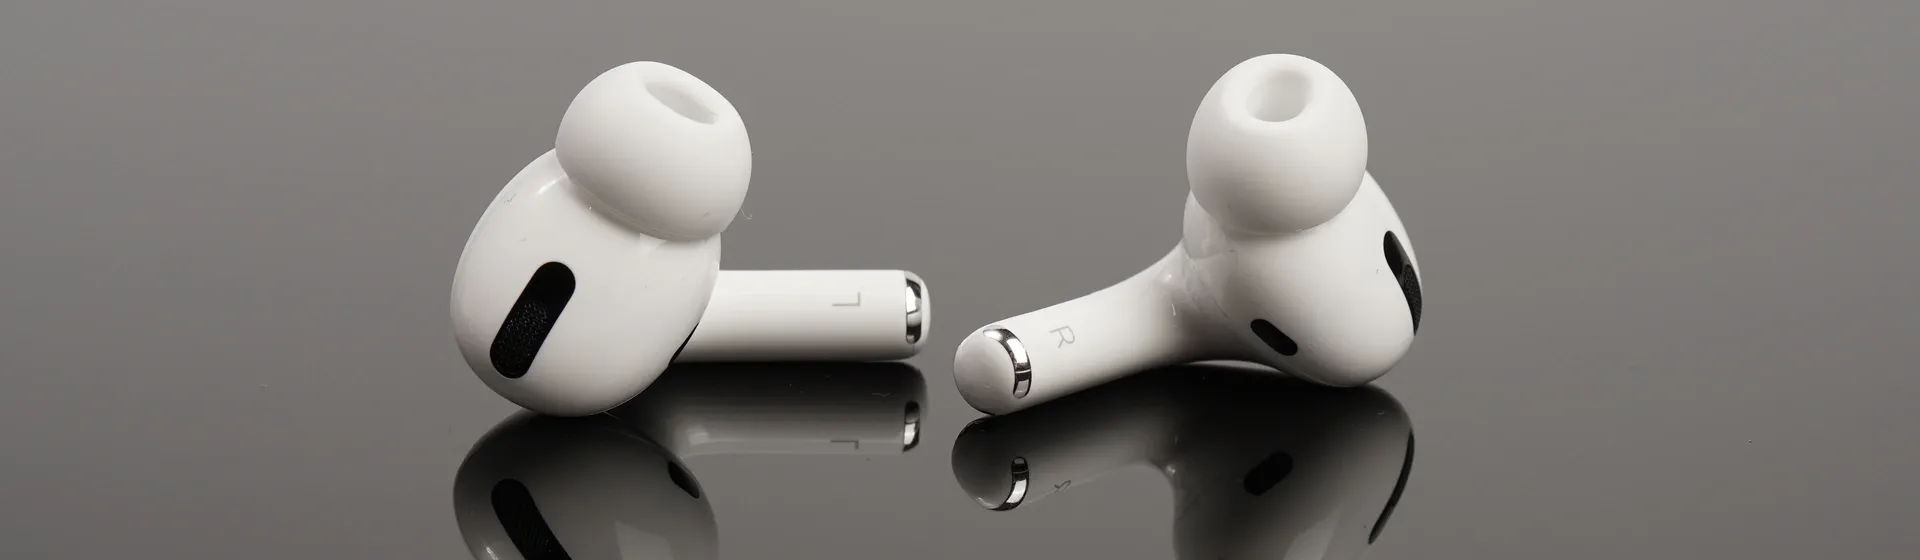 Fone intra-auricular da Apple, o AirPods Pro, em fundo cinza